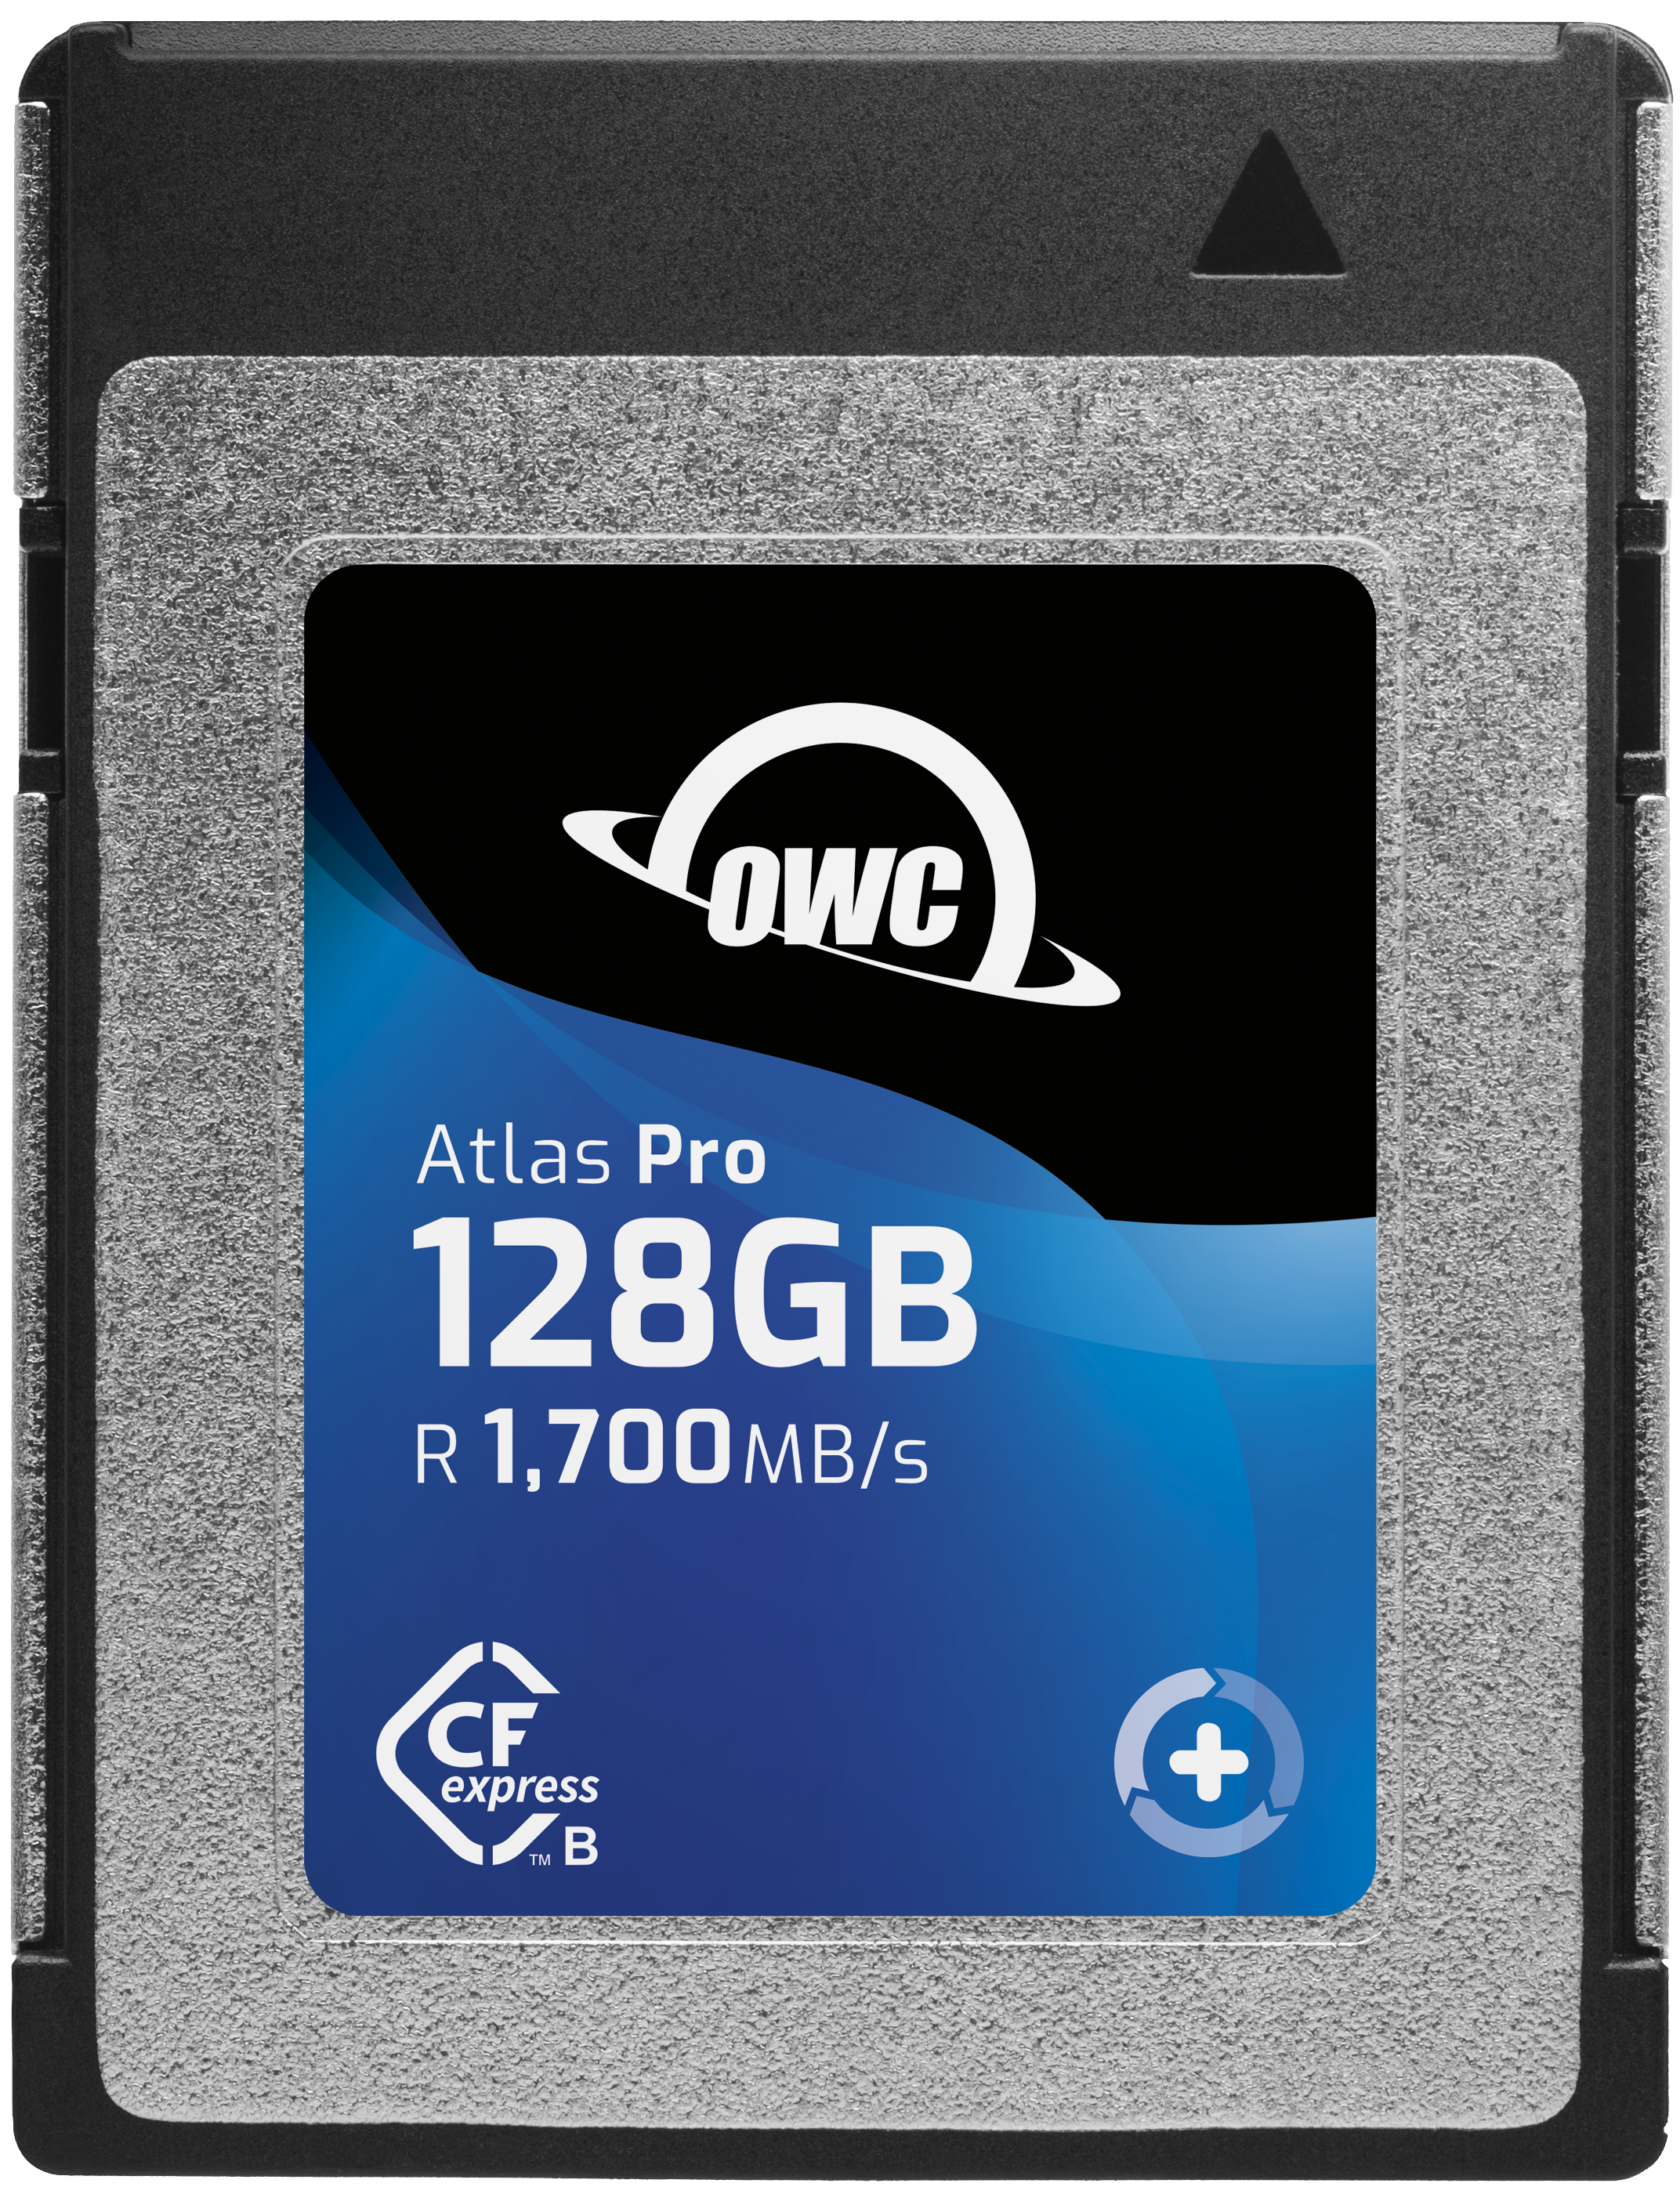 128GB OWC Atlas Pro CFexpress Memory Card